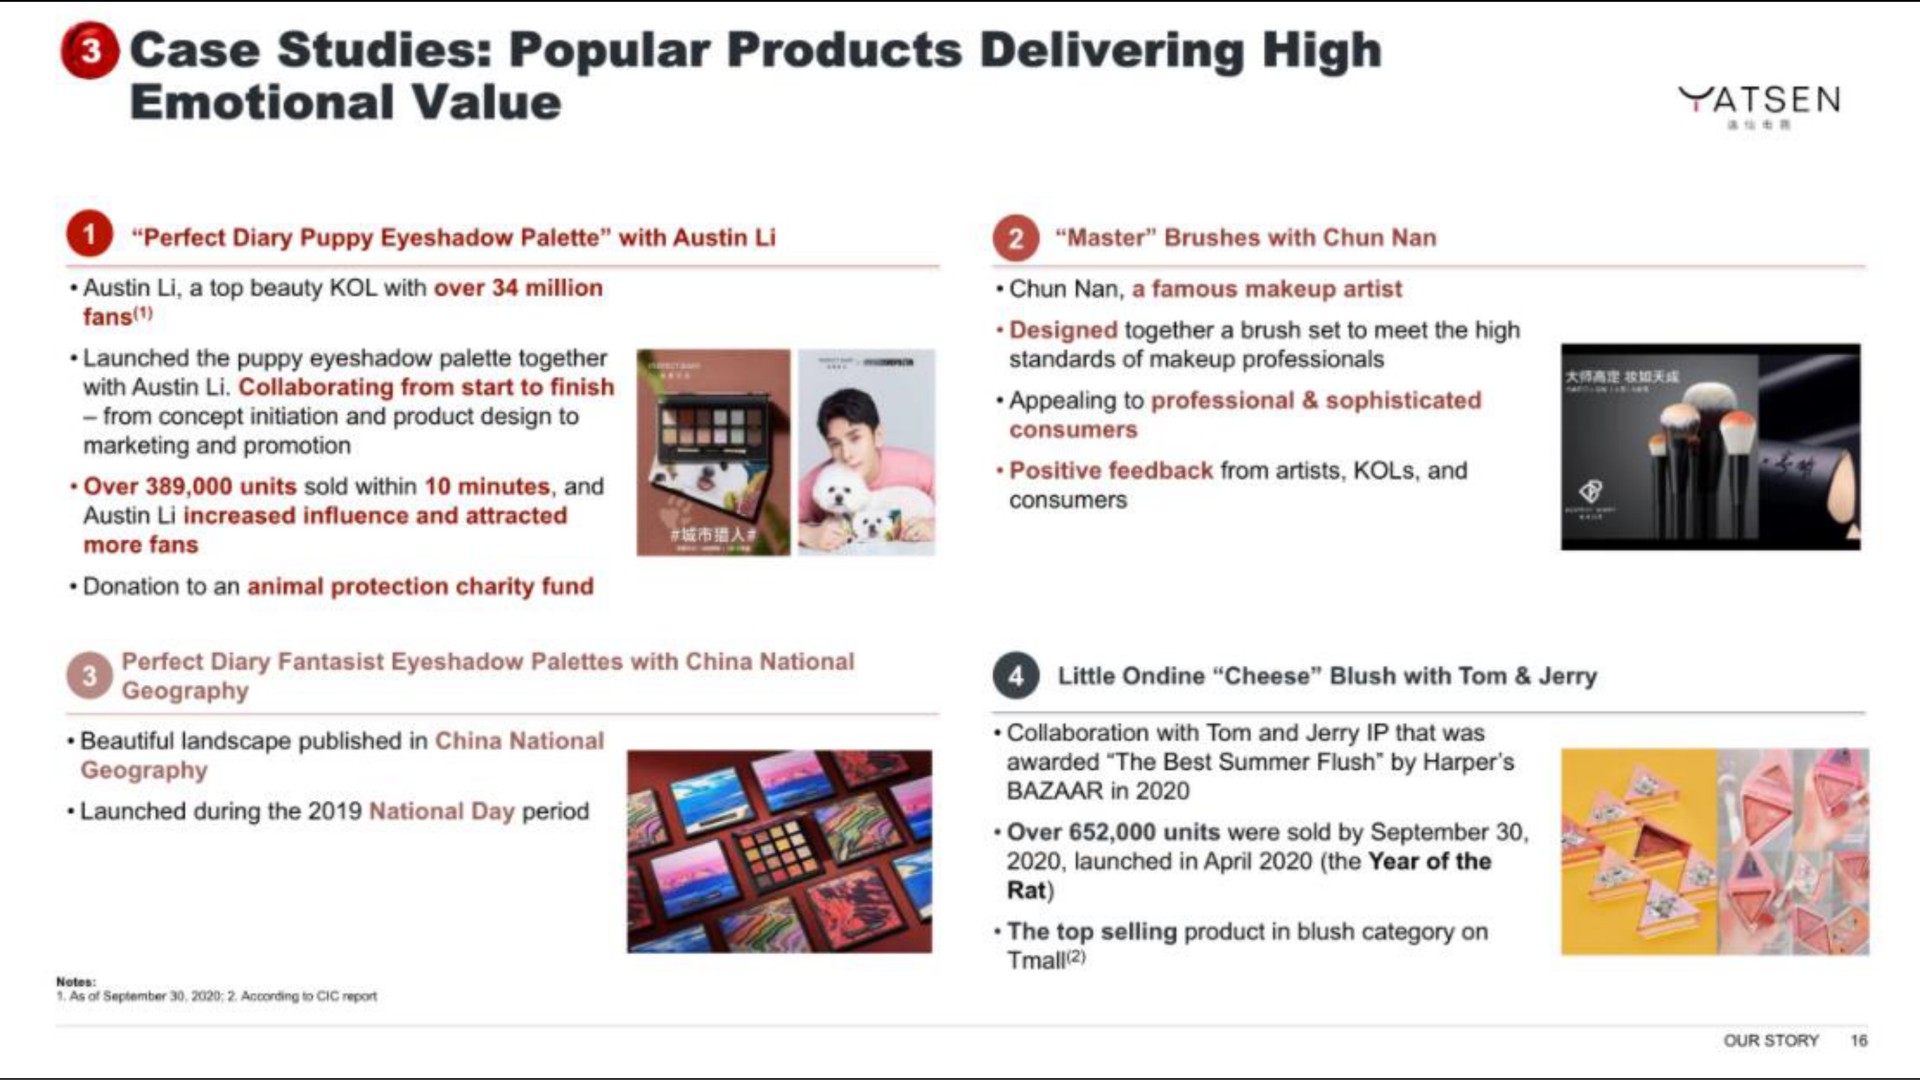 case studies popular products delivering high emotional value | Yatsen